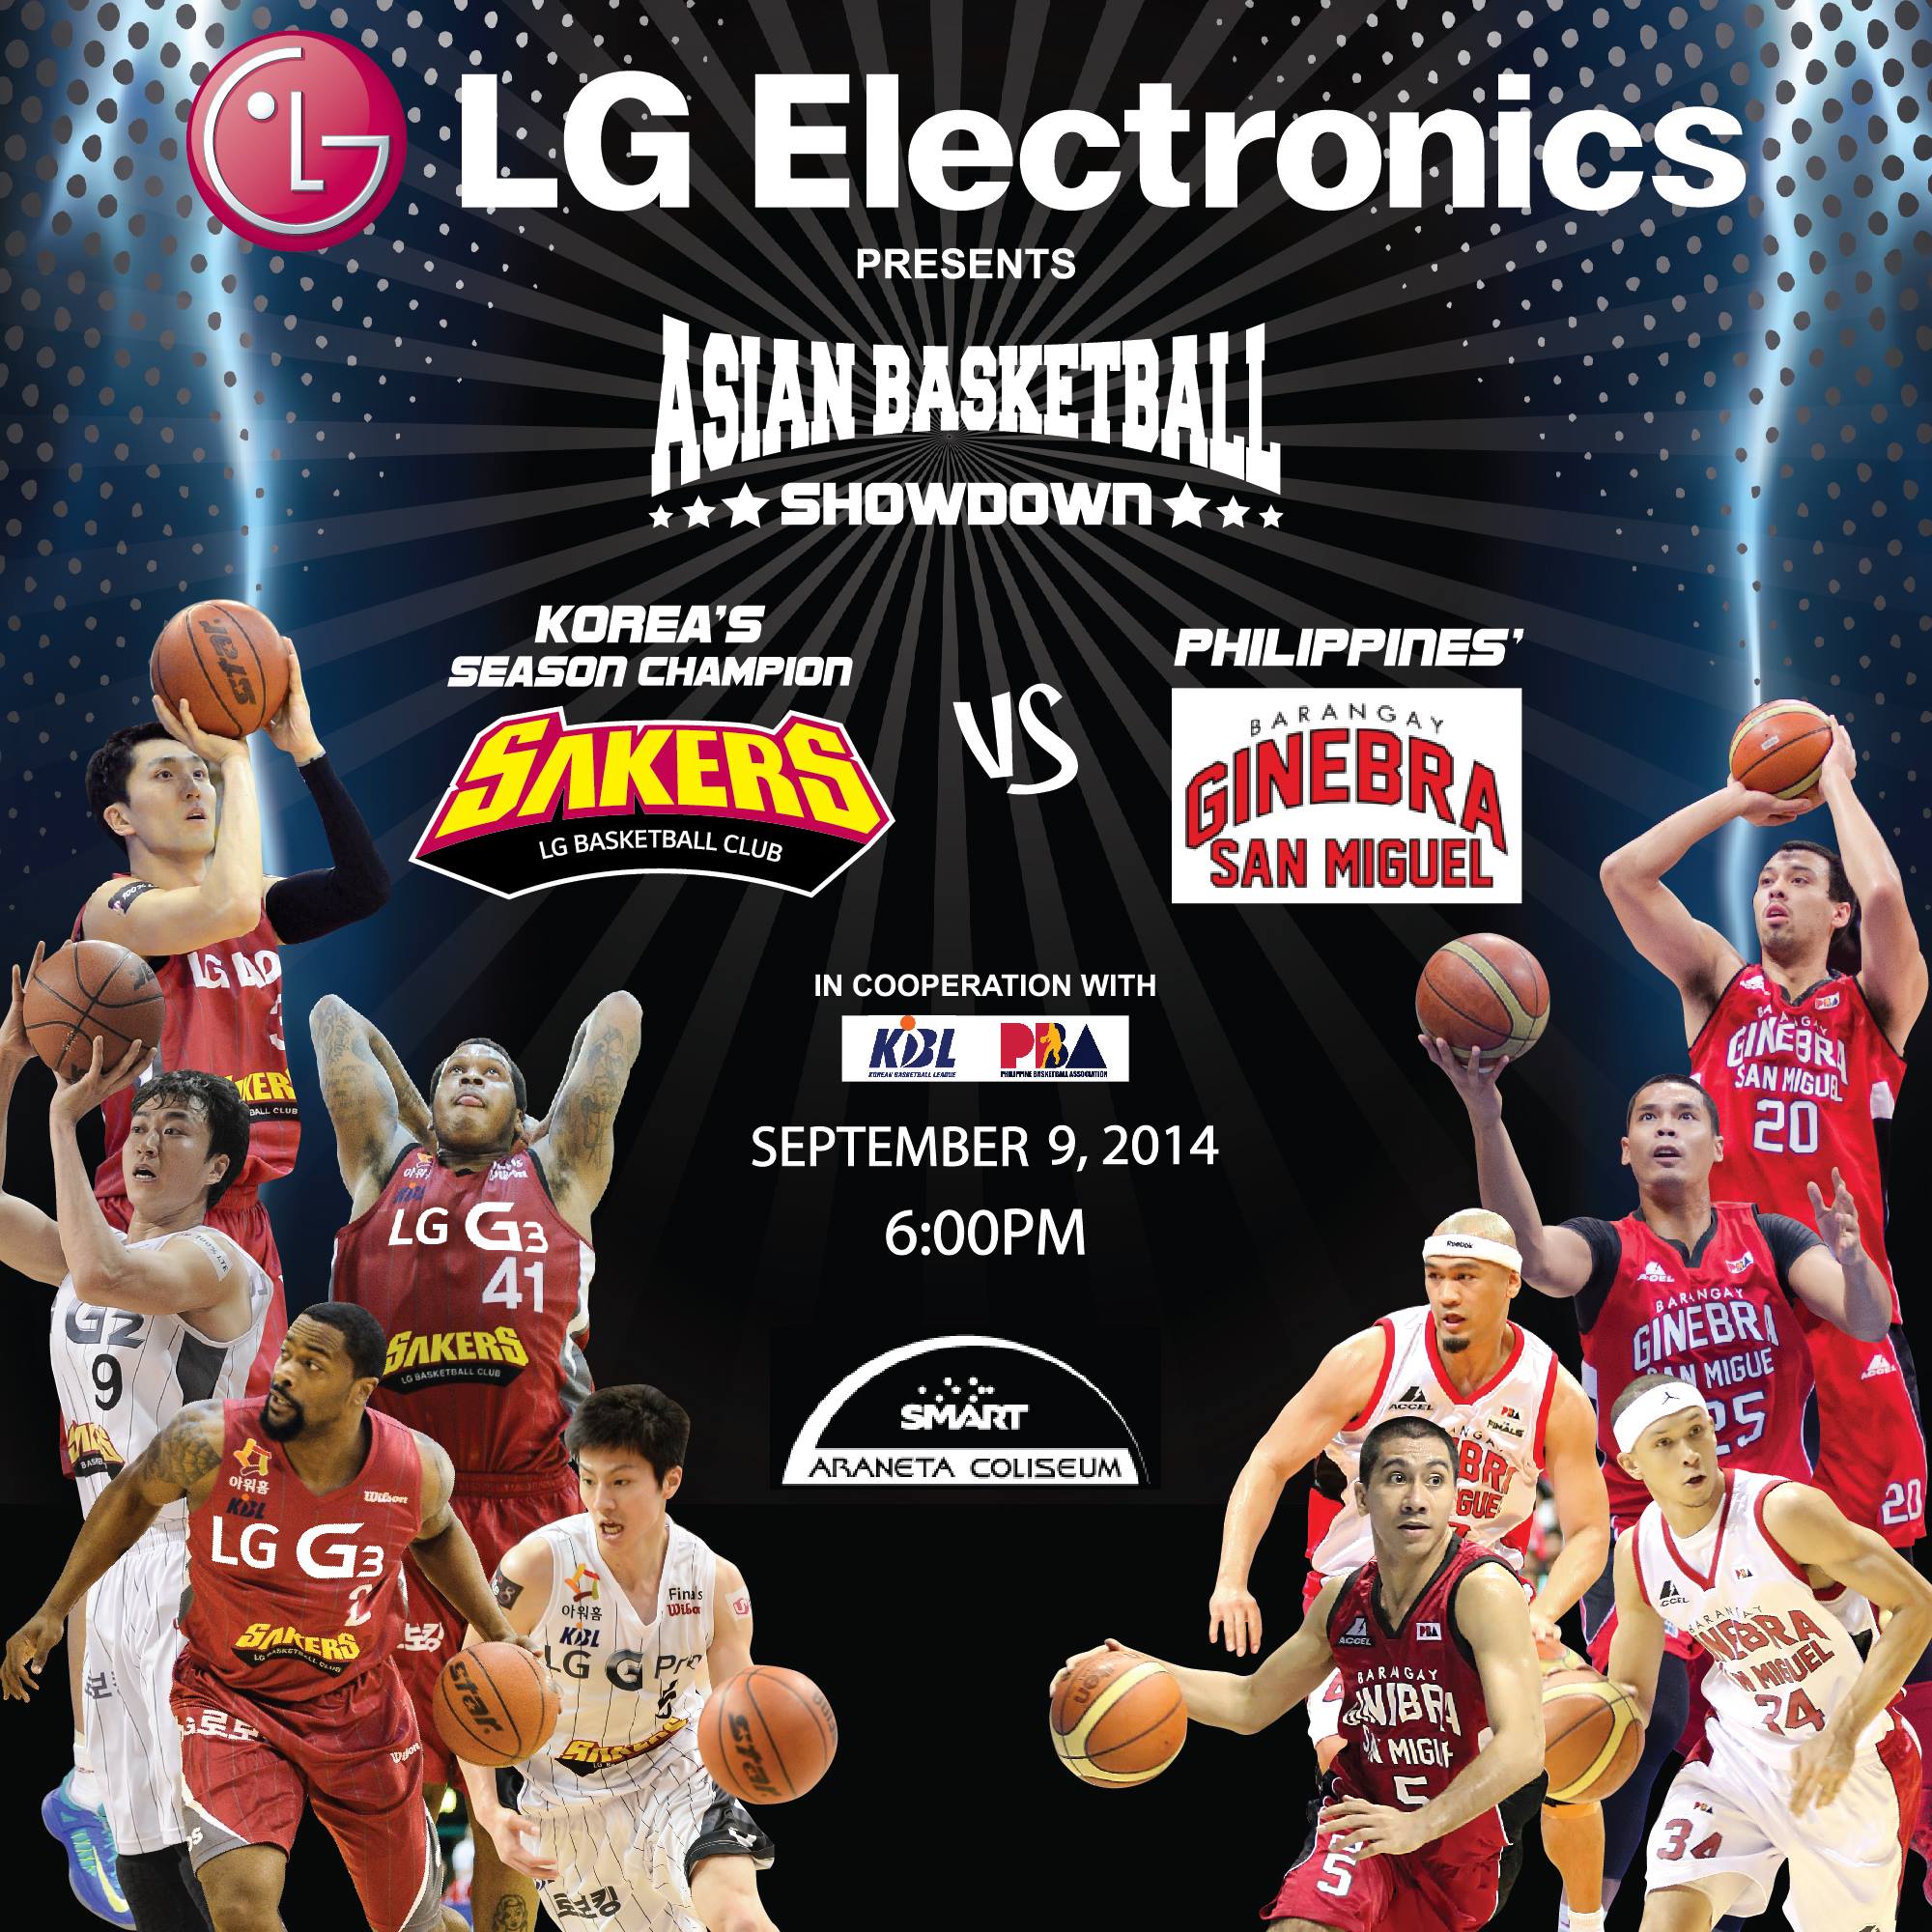 LG Sakers vs Barangay Ginebra - ASIAN BASKETBALL SHOWDOWN